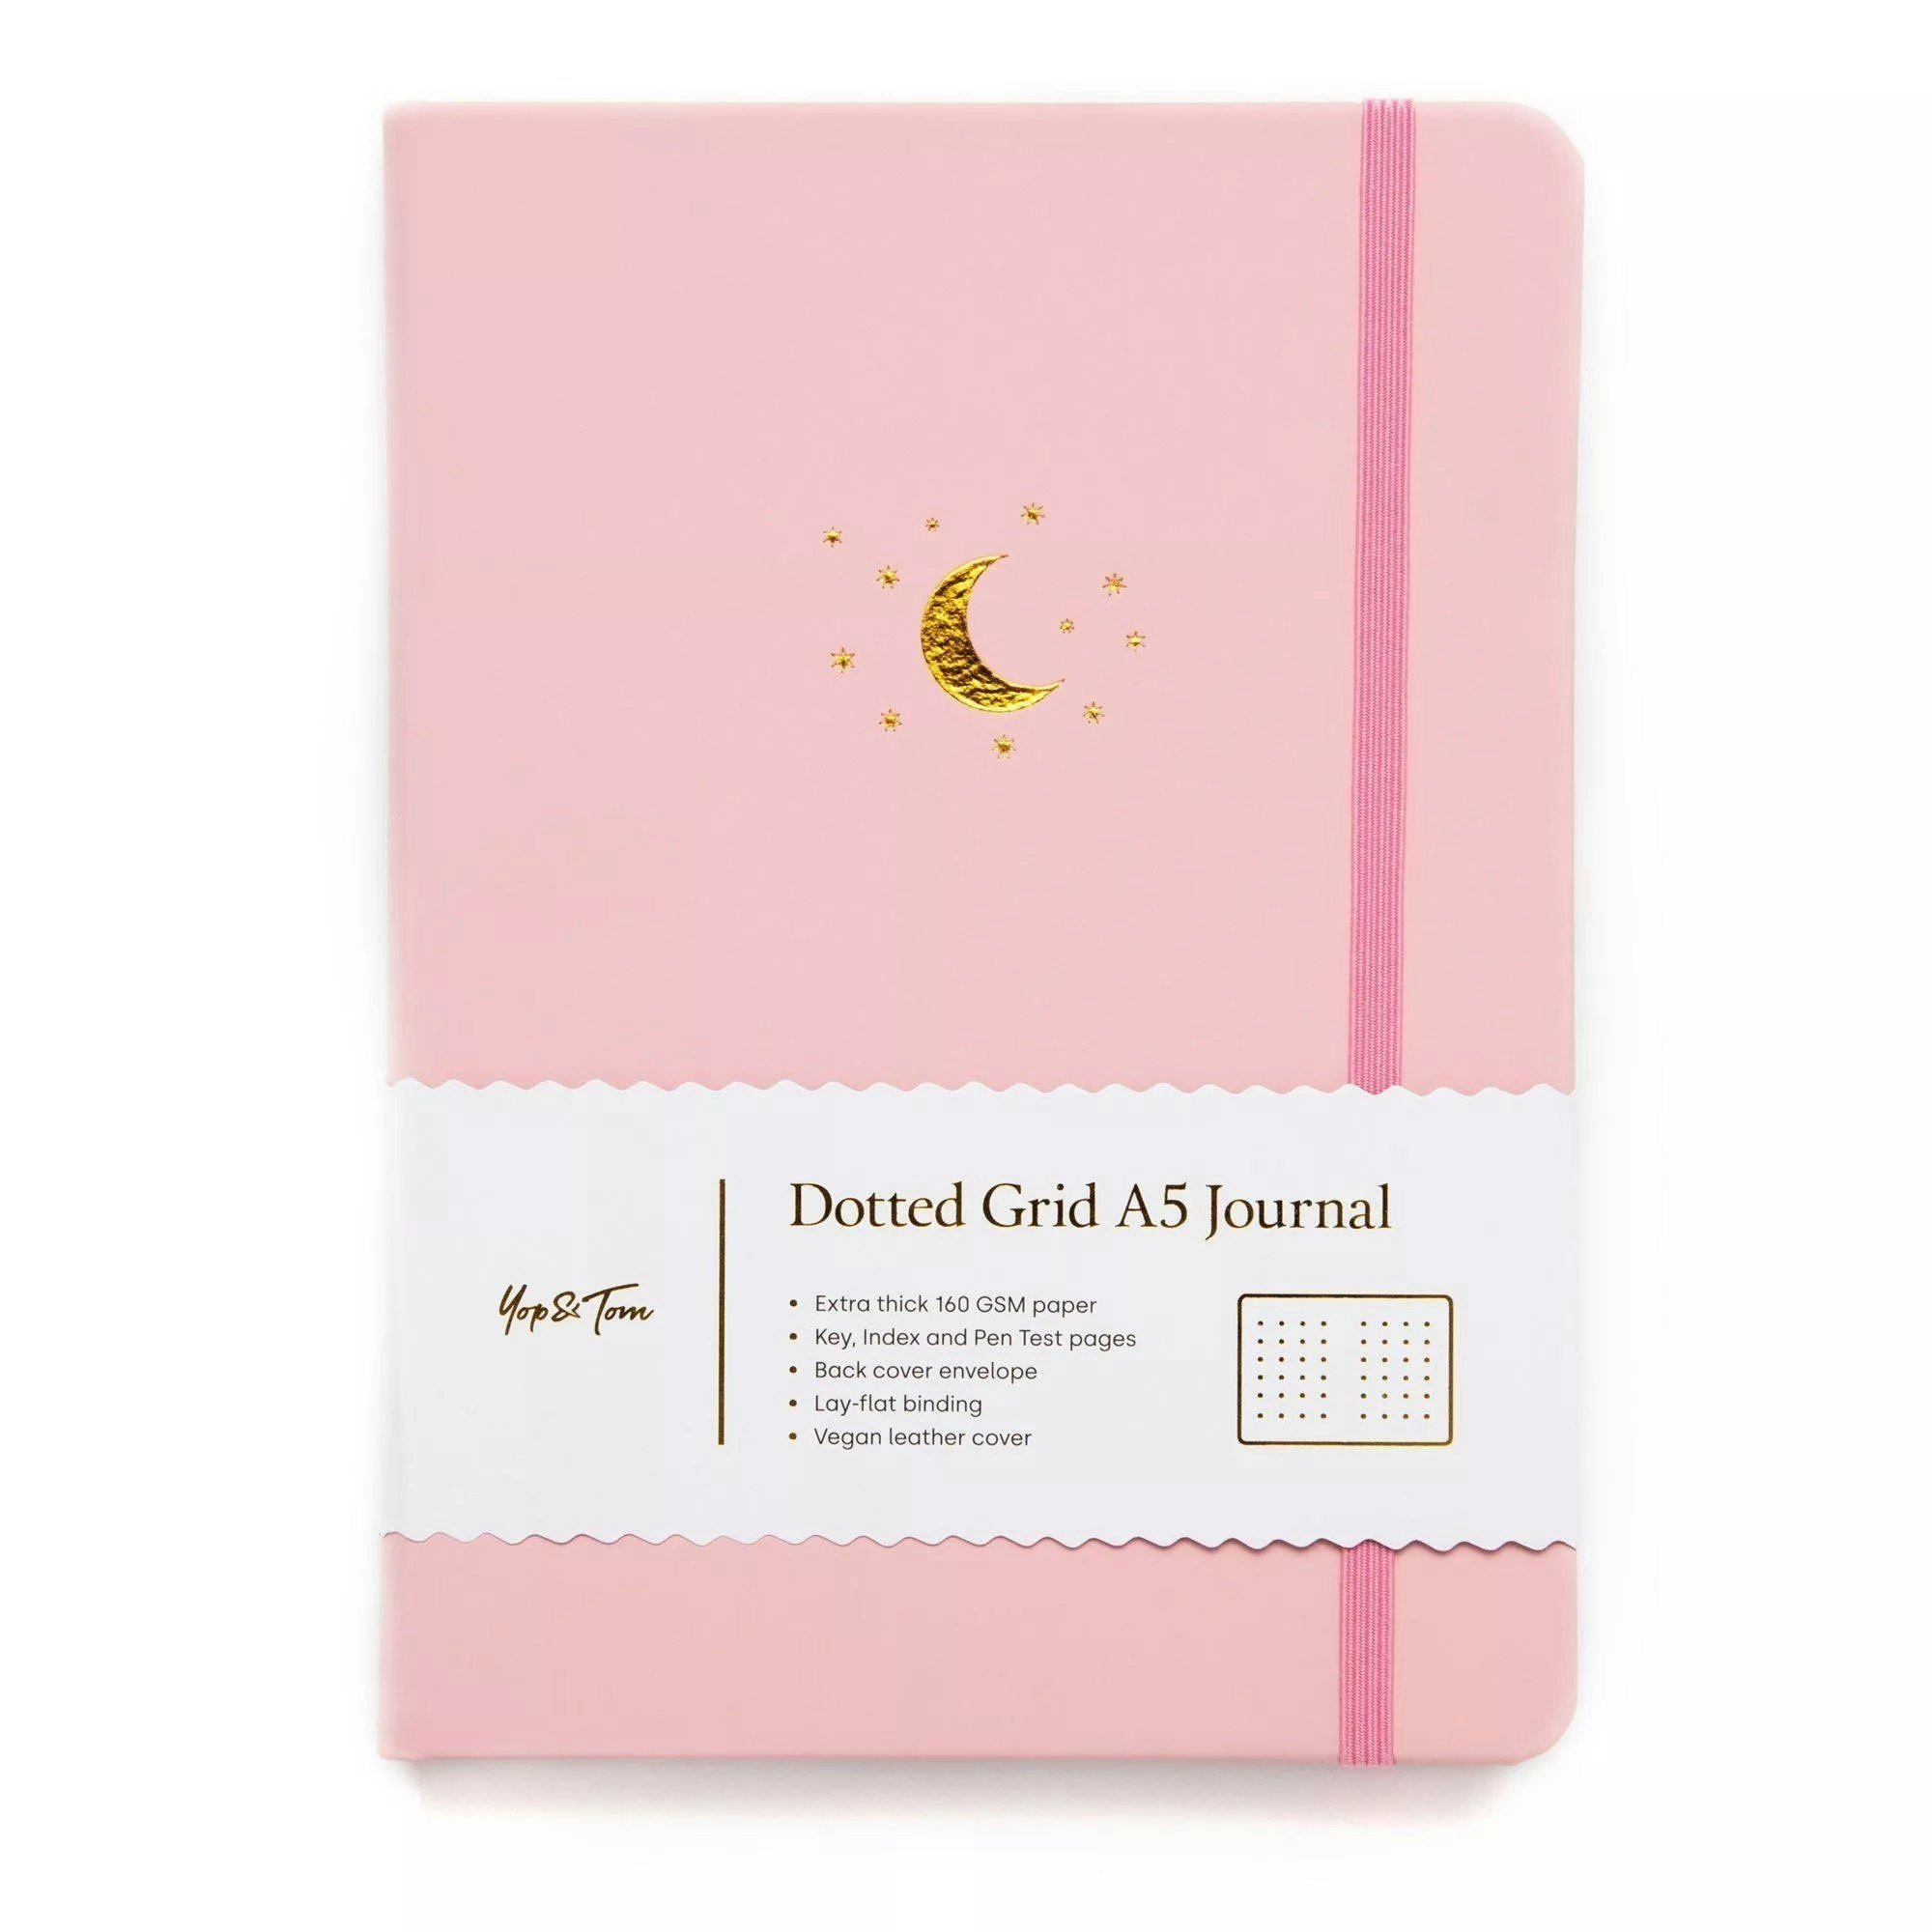 Yop & Tom Dot Grid Journal - Moon and Stars Blush Pink A5